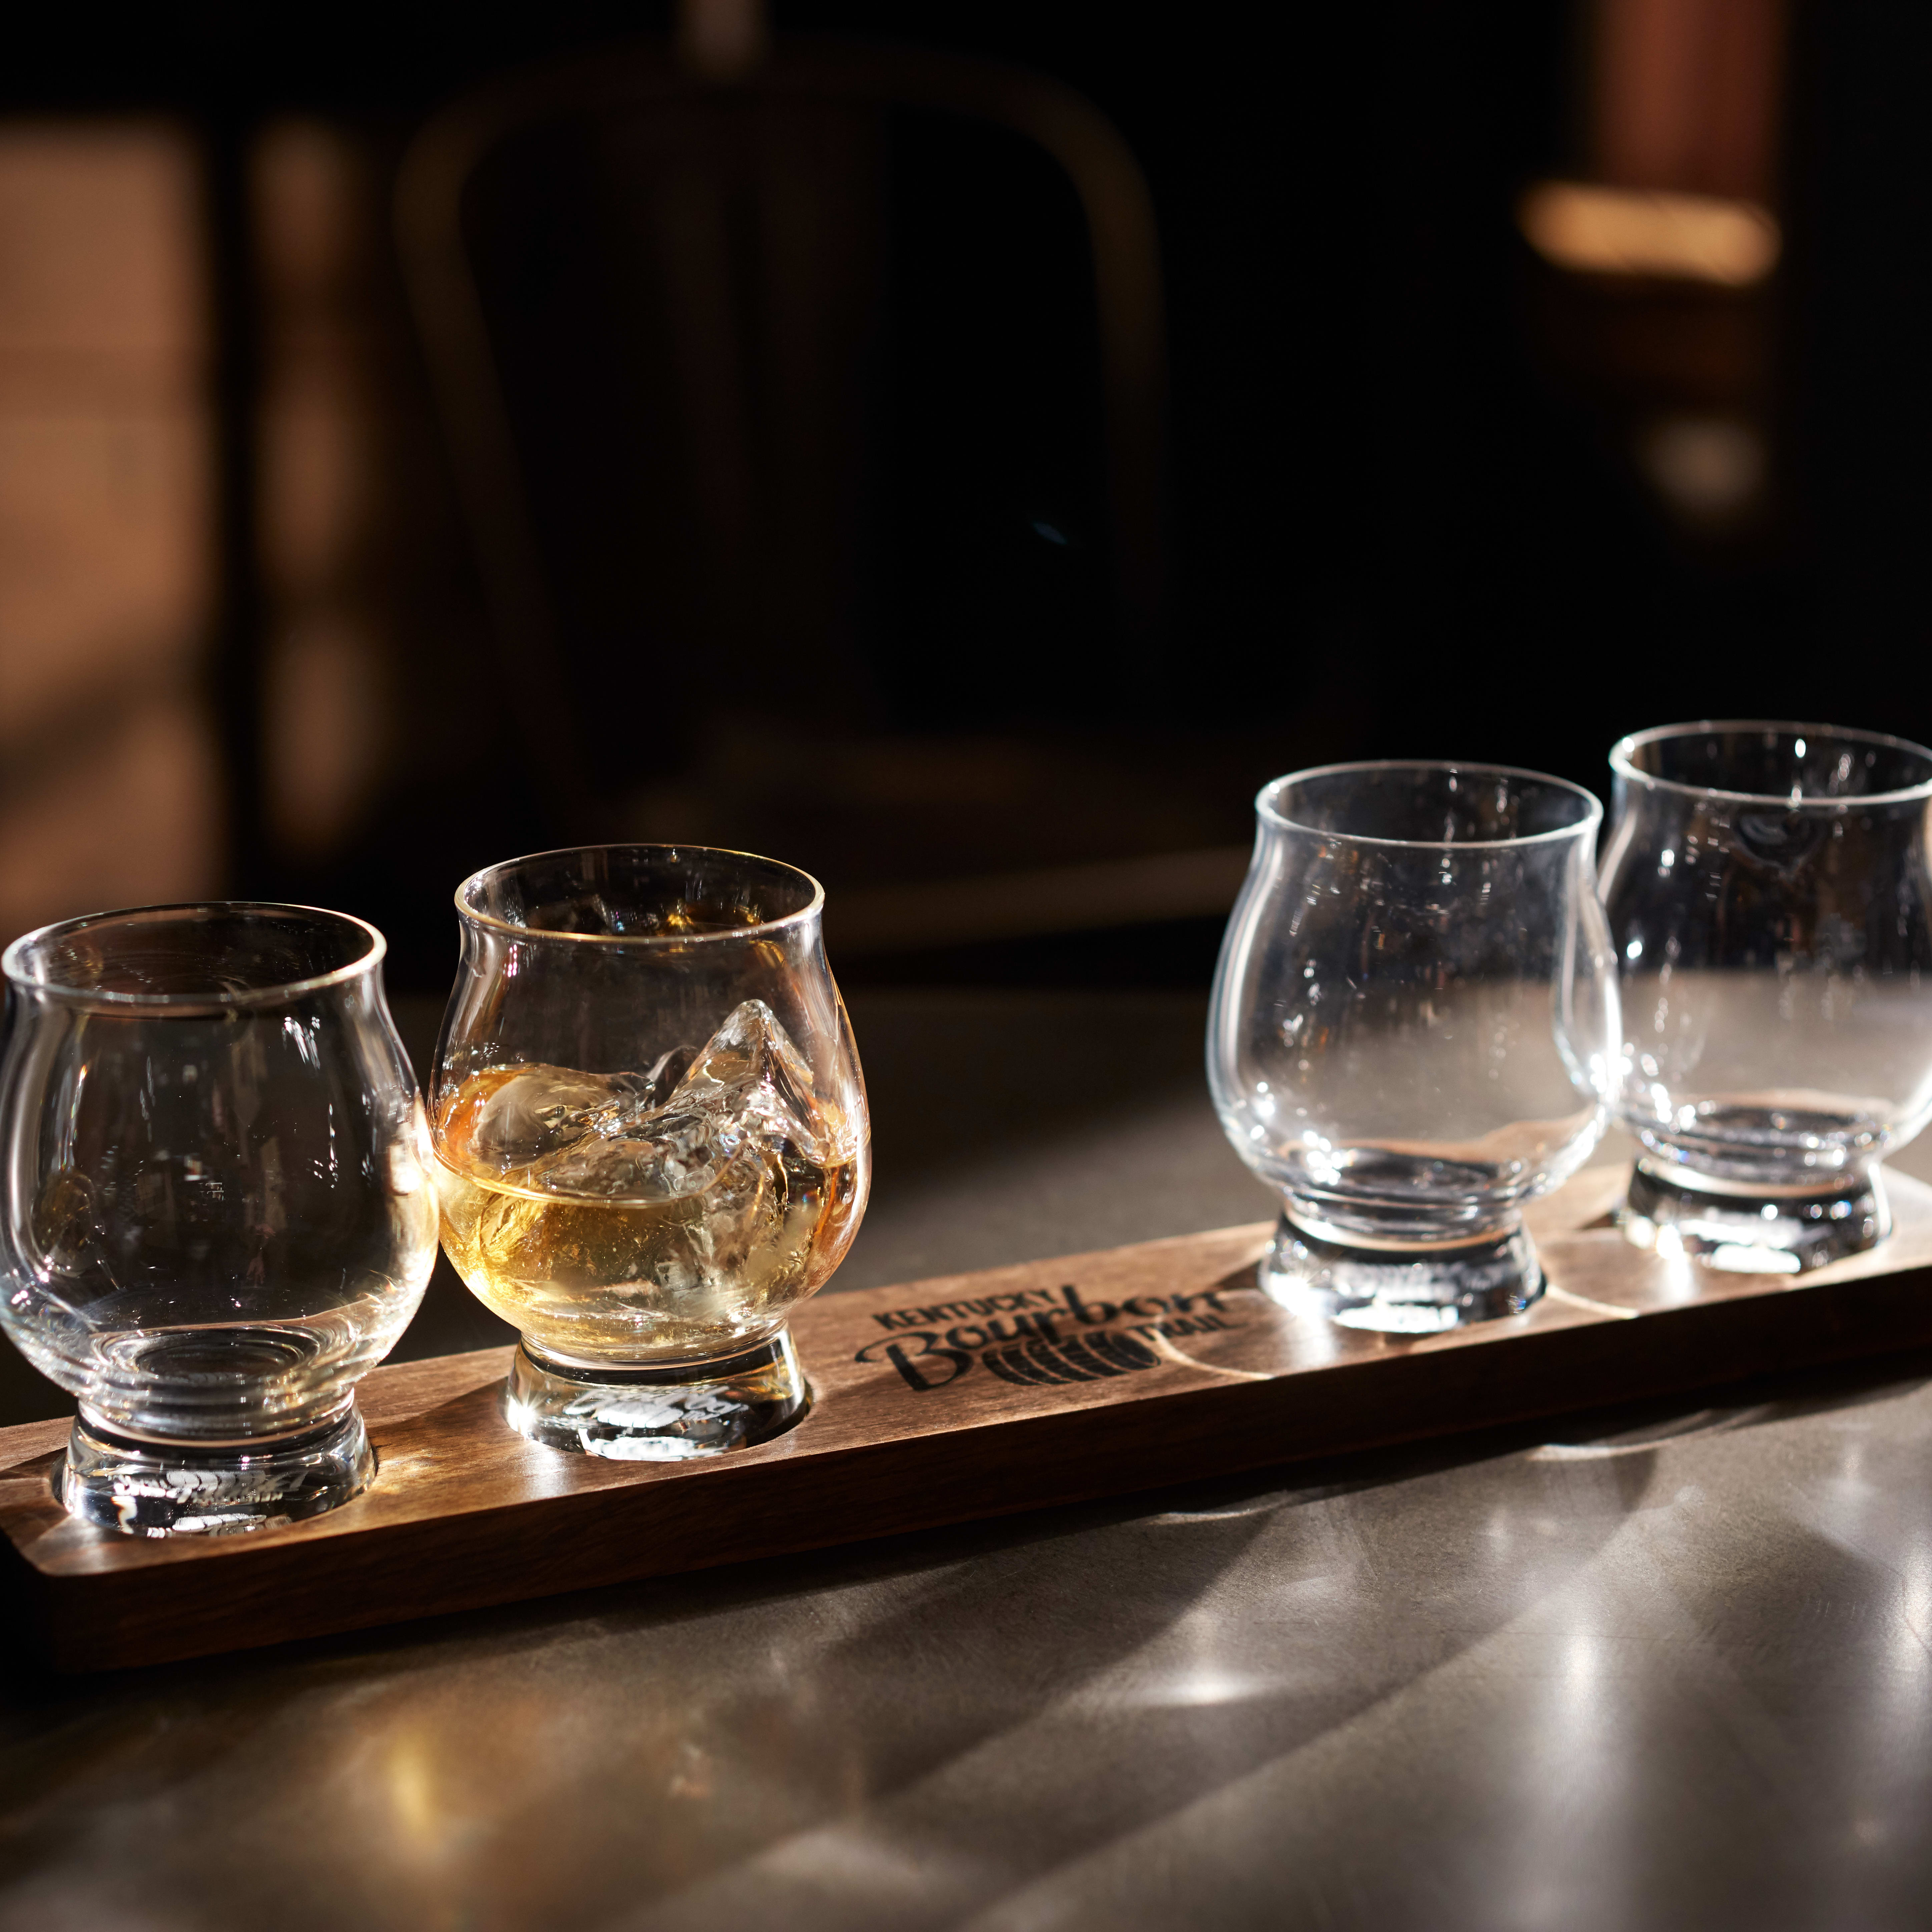 Kentucky Bourbon Trail Whiskey Glasses, 8-ounce, Set of 4 – Libbey Shop